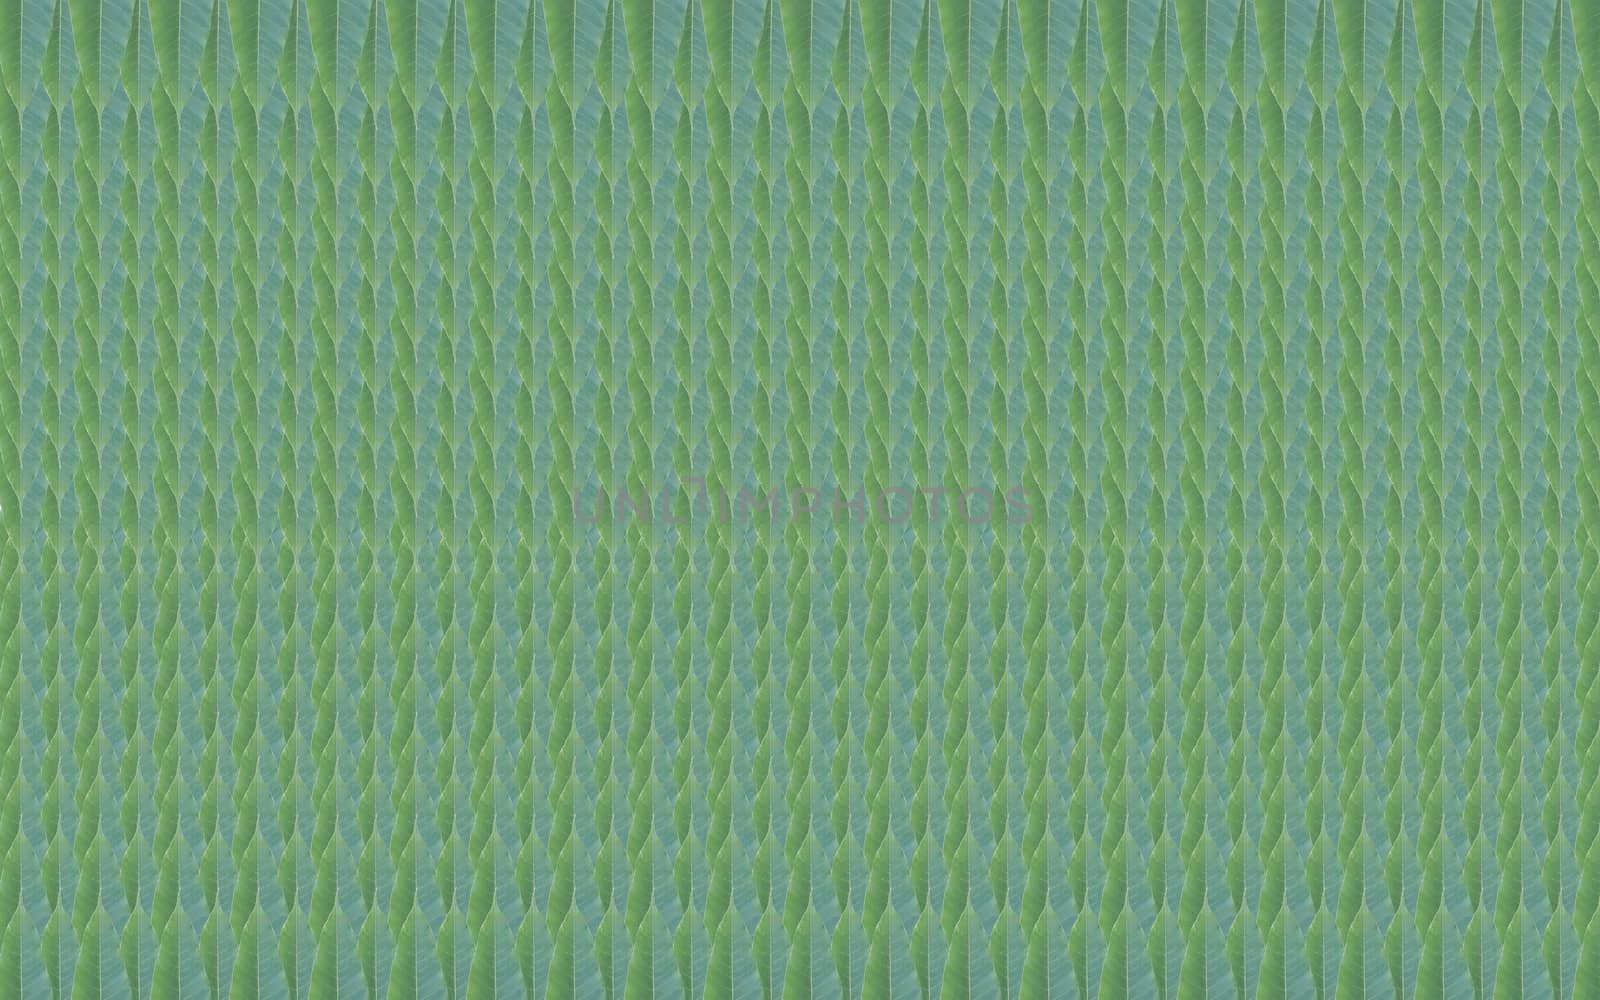 background made of fresh green leaf pattern.